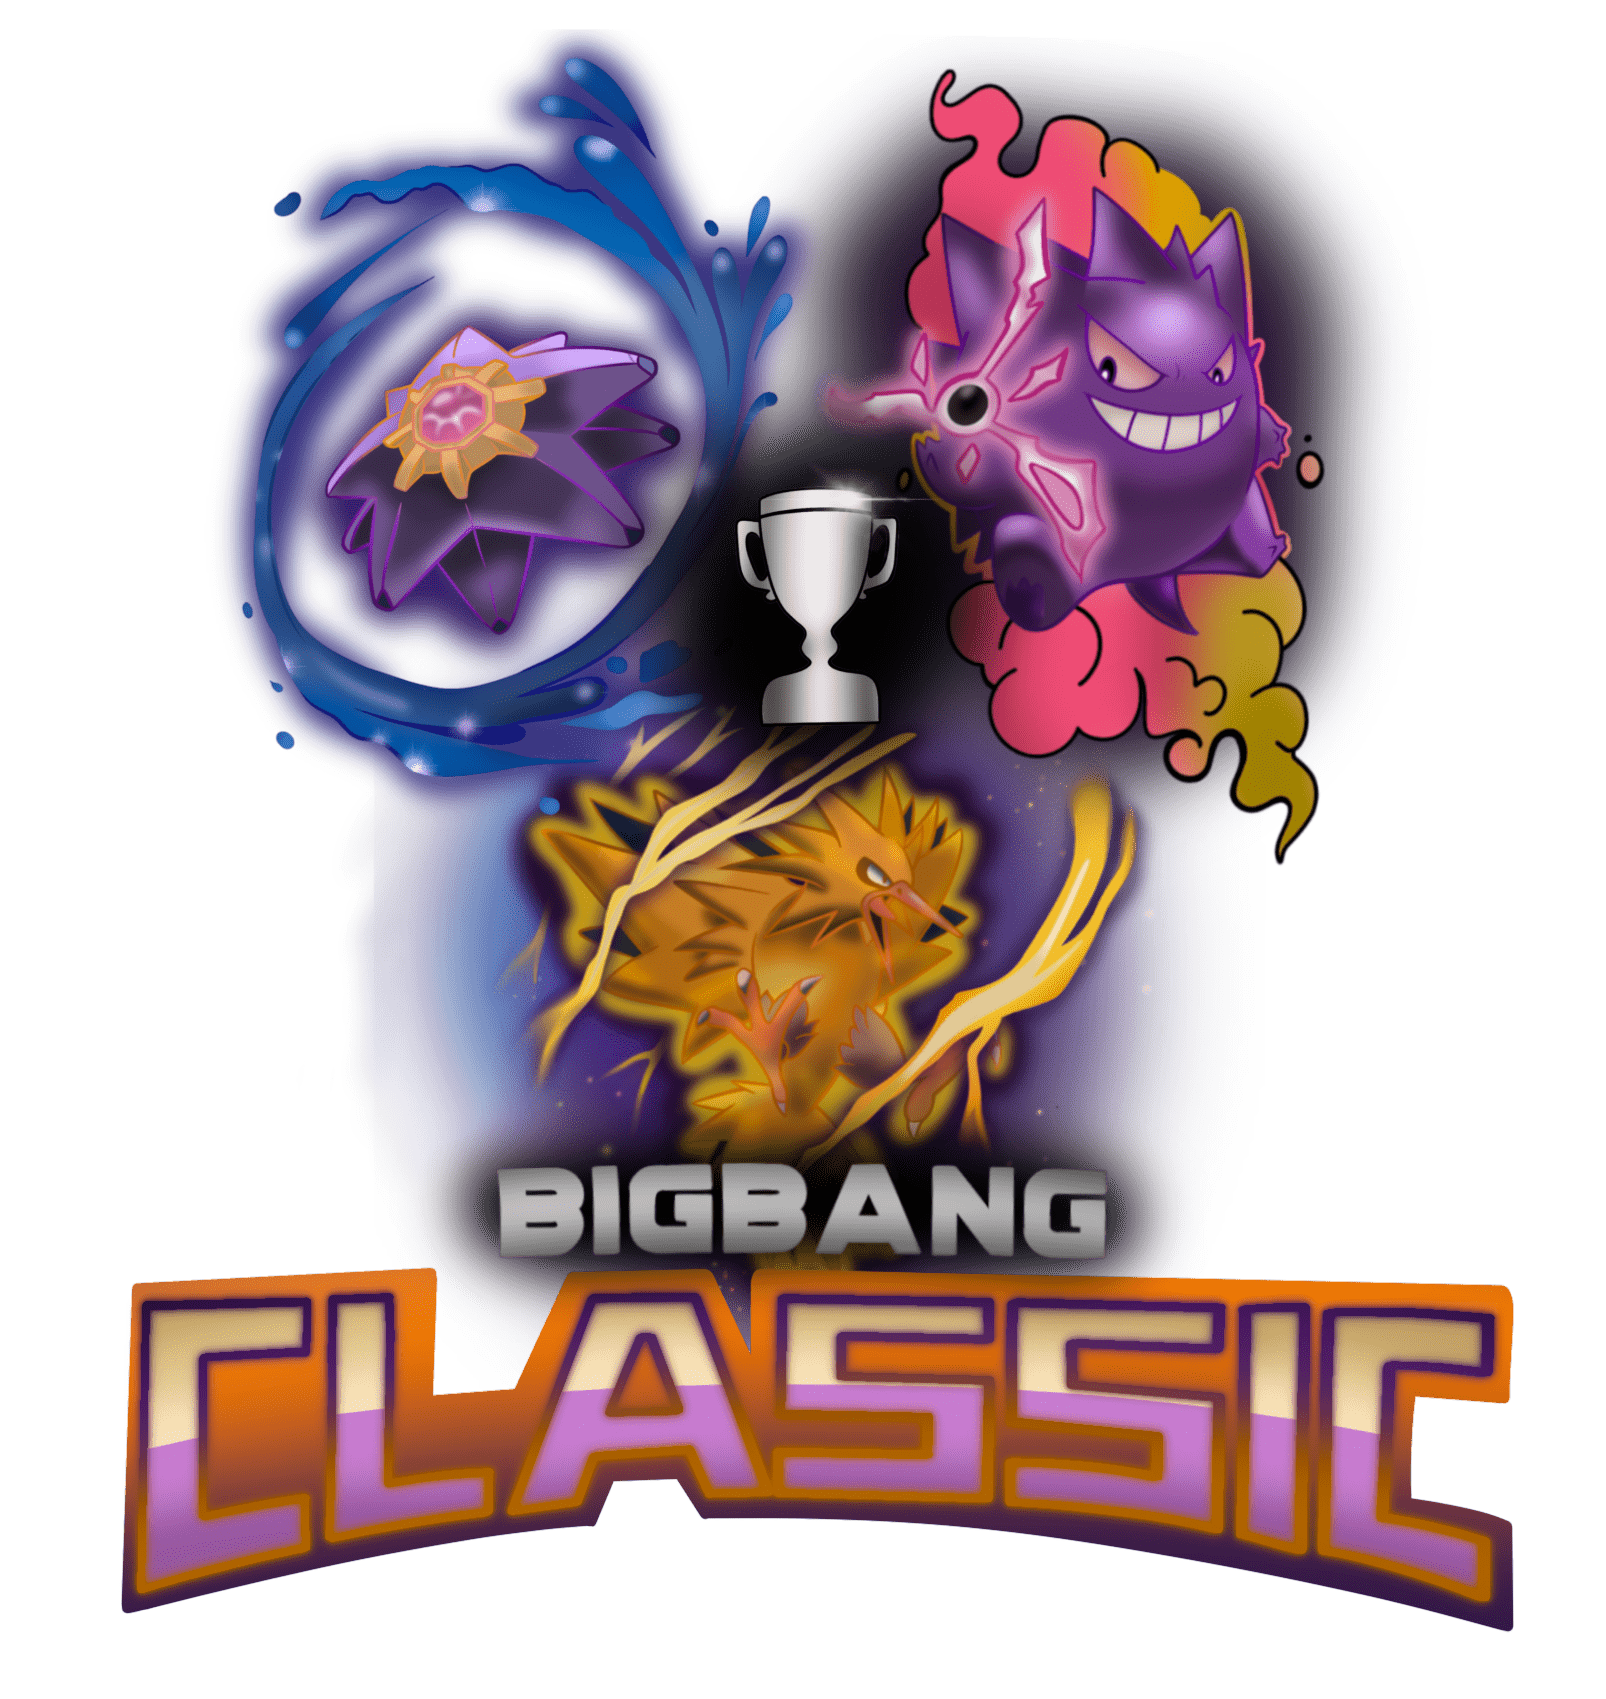 BigBang_Classic-min.png